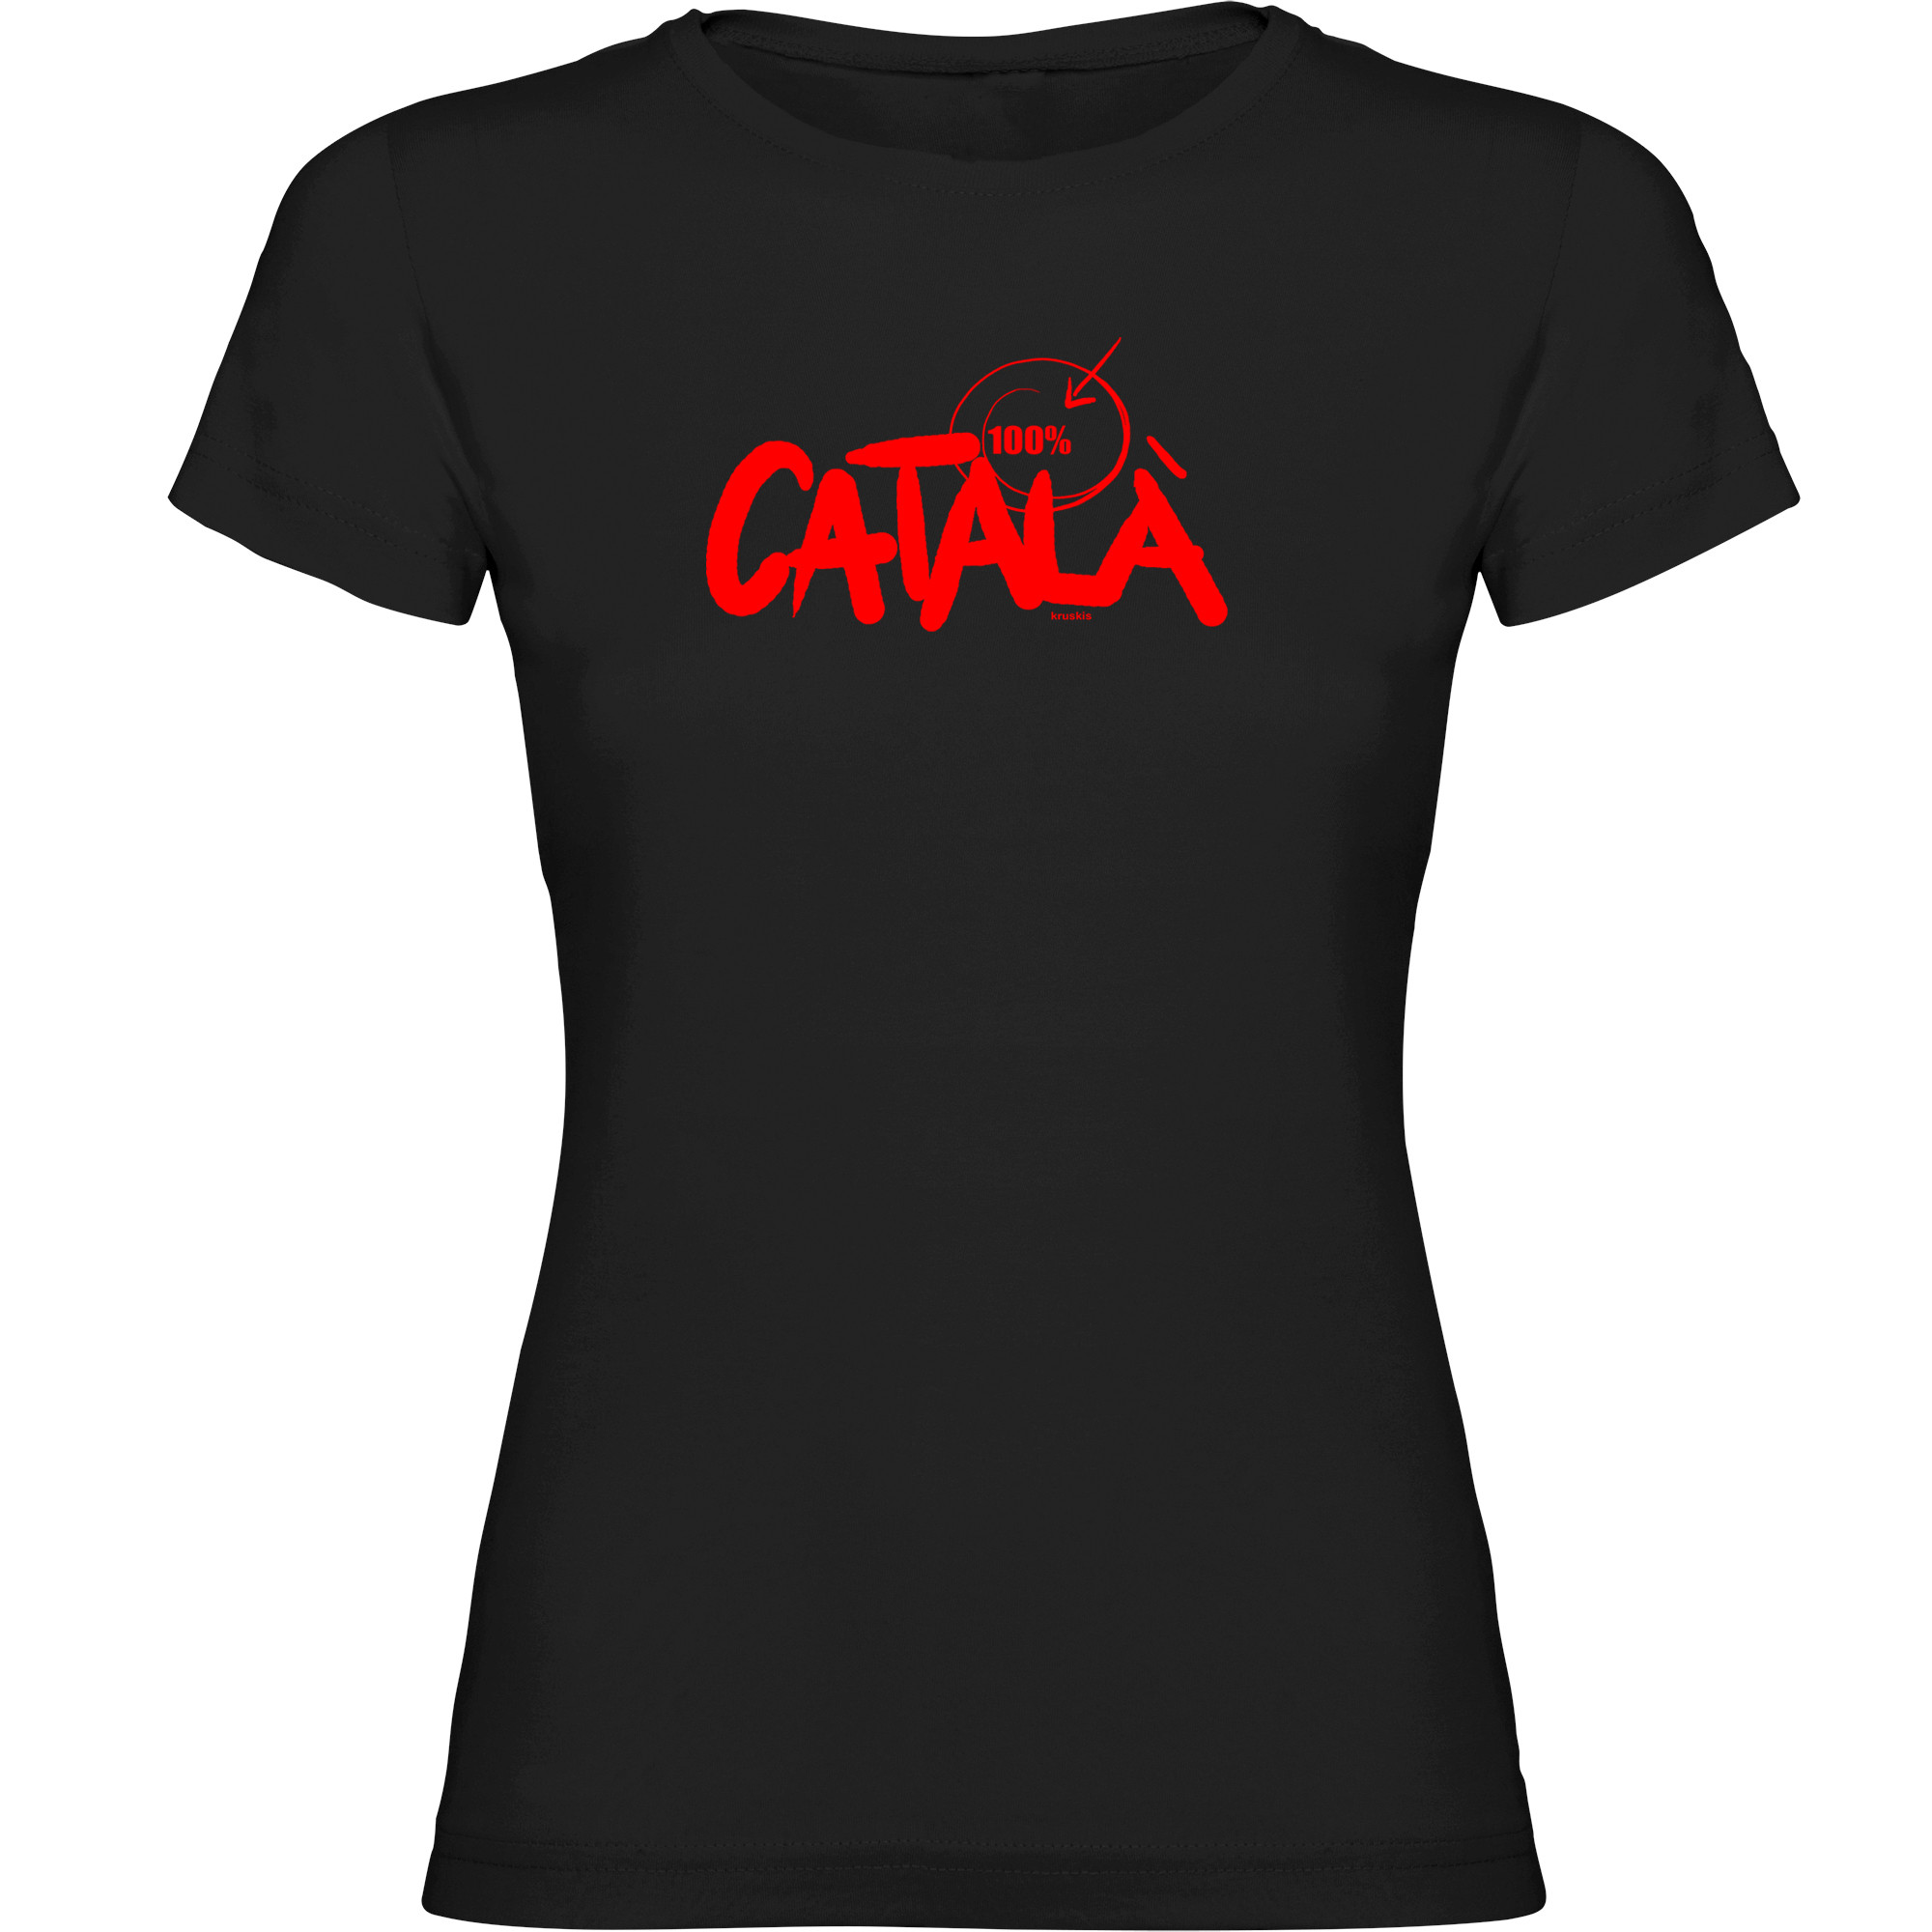 T Shirt Katalonien 100% Catala Kortarmad Kvinna